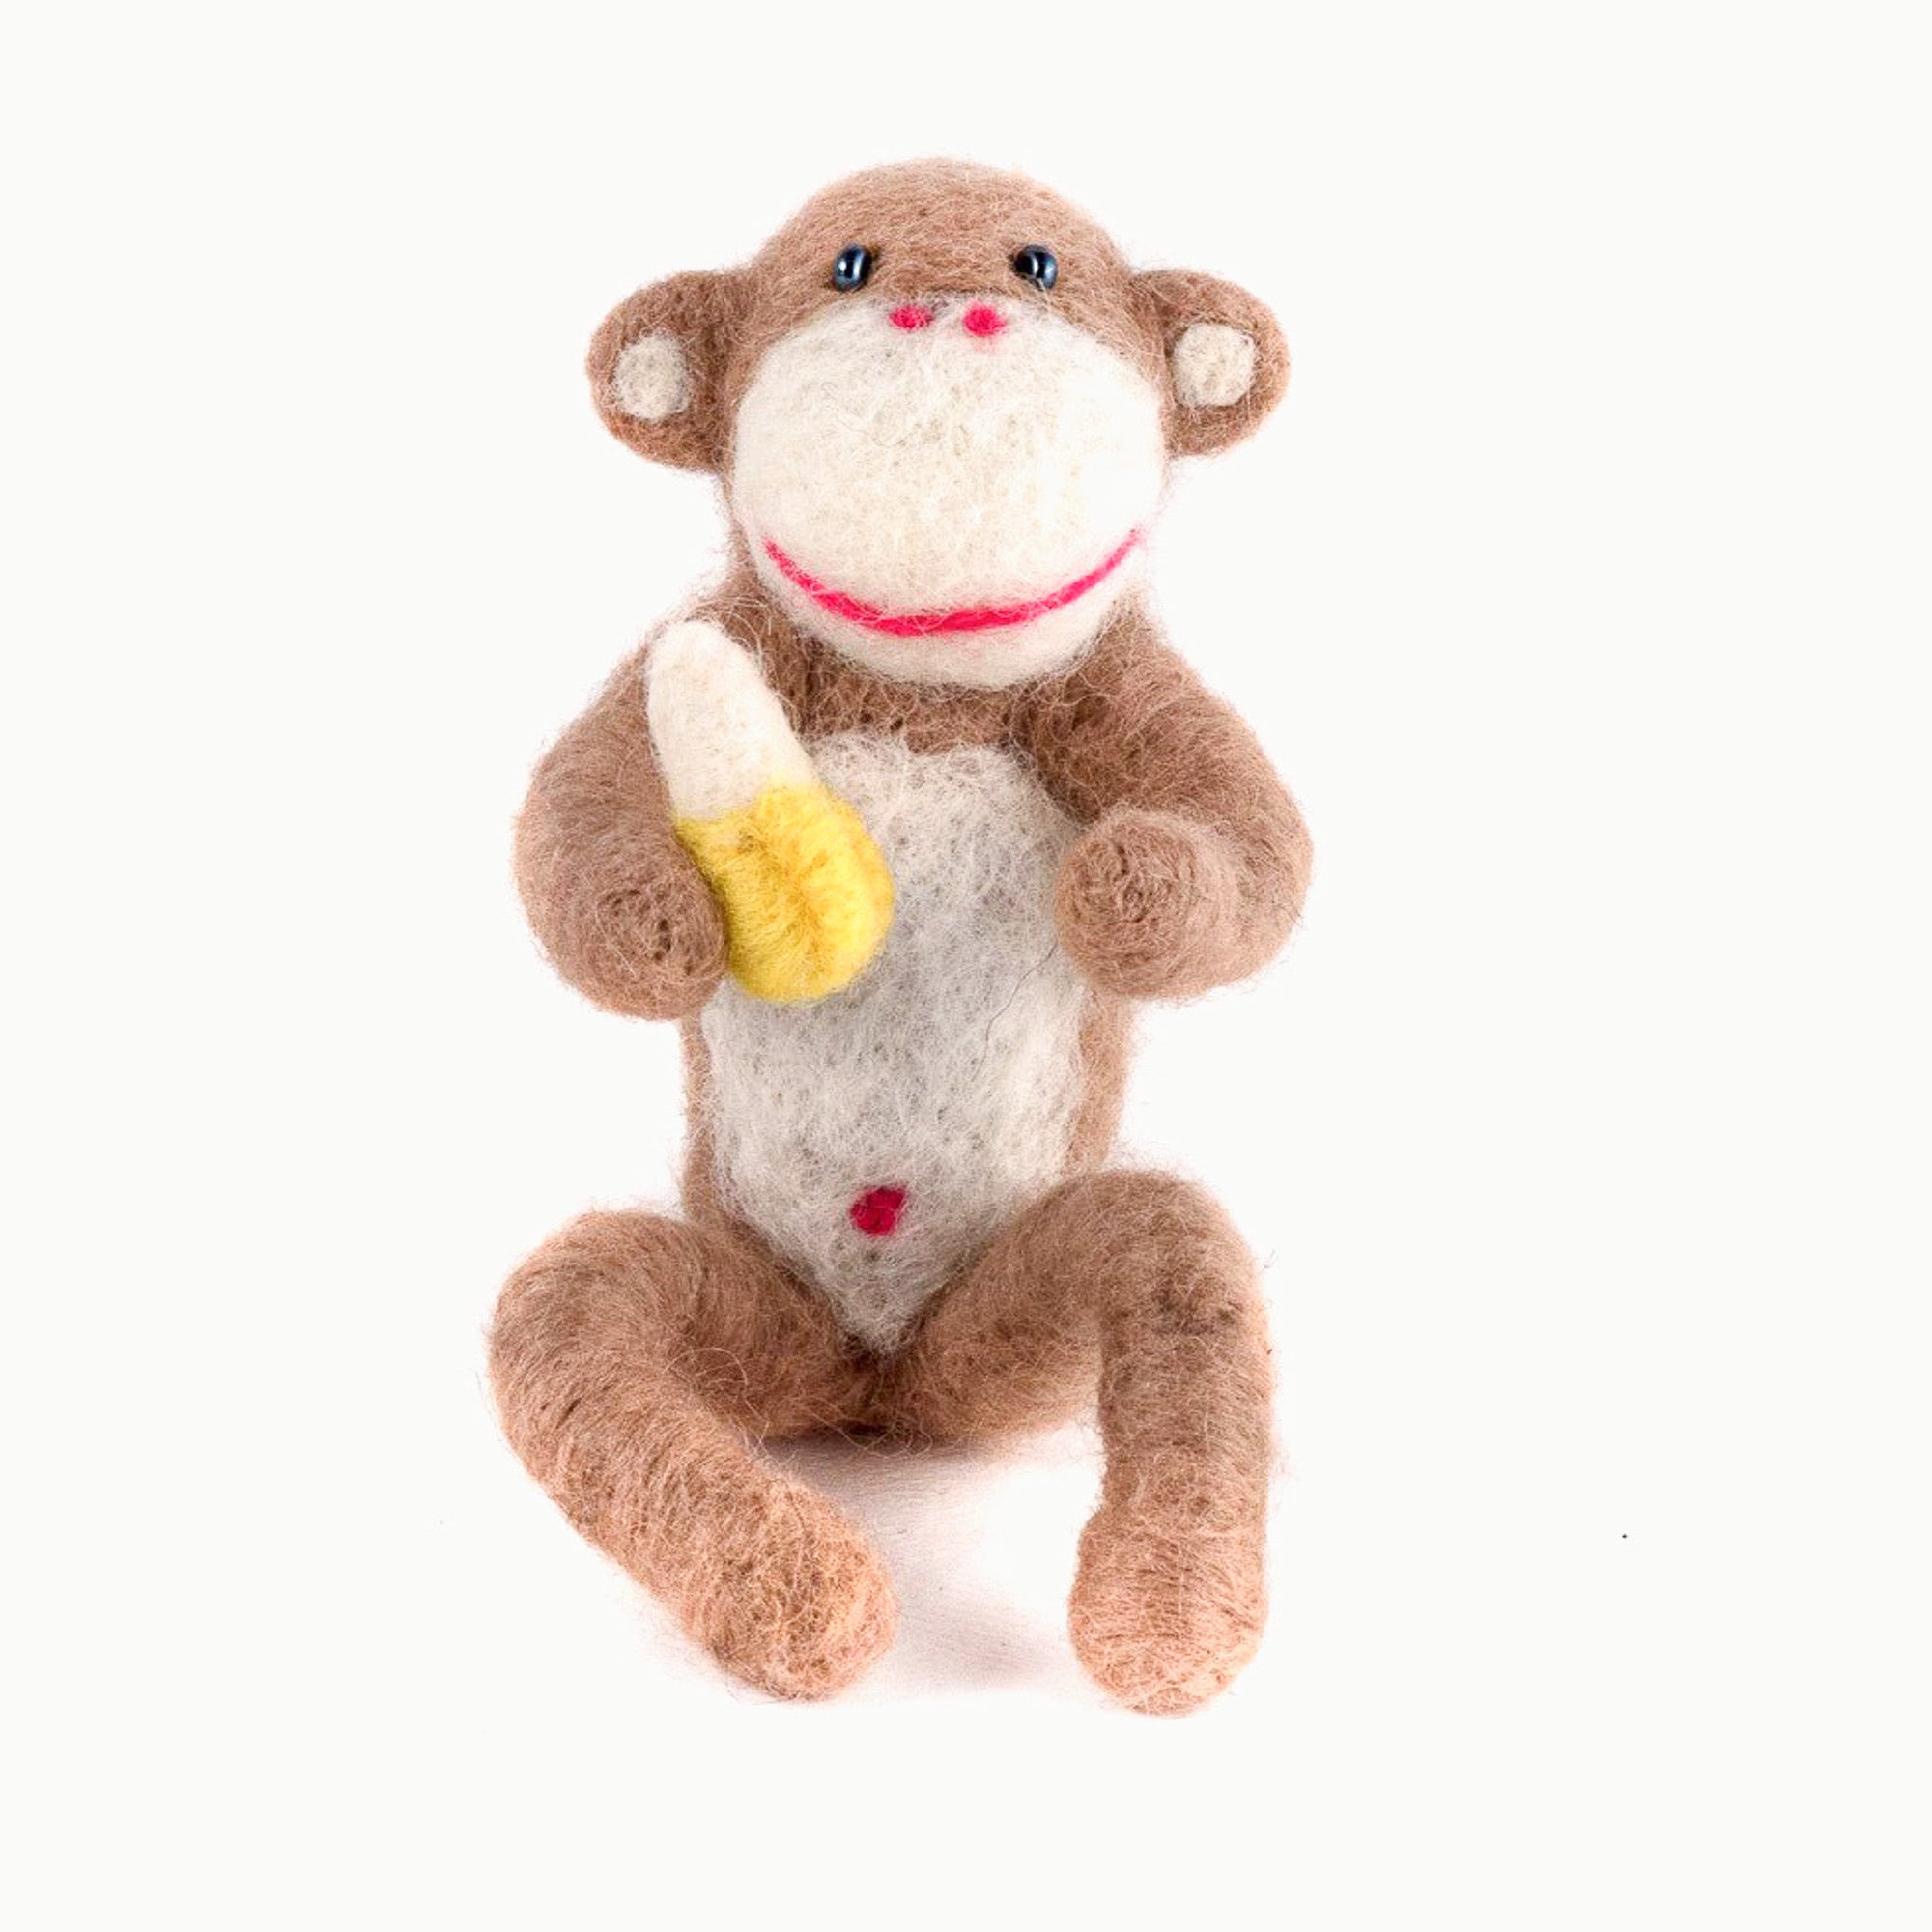 Felted Wool Monkey with Banana